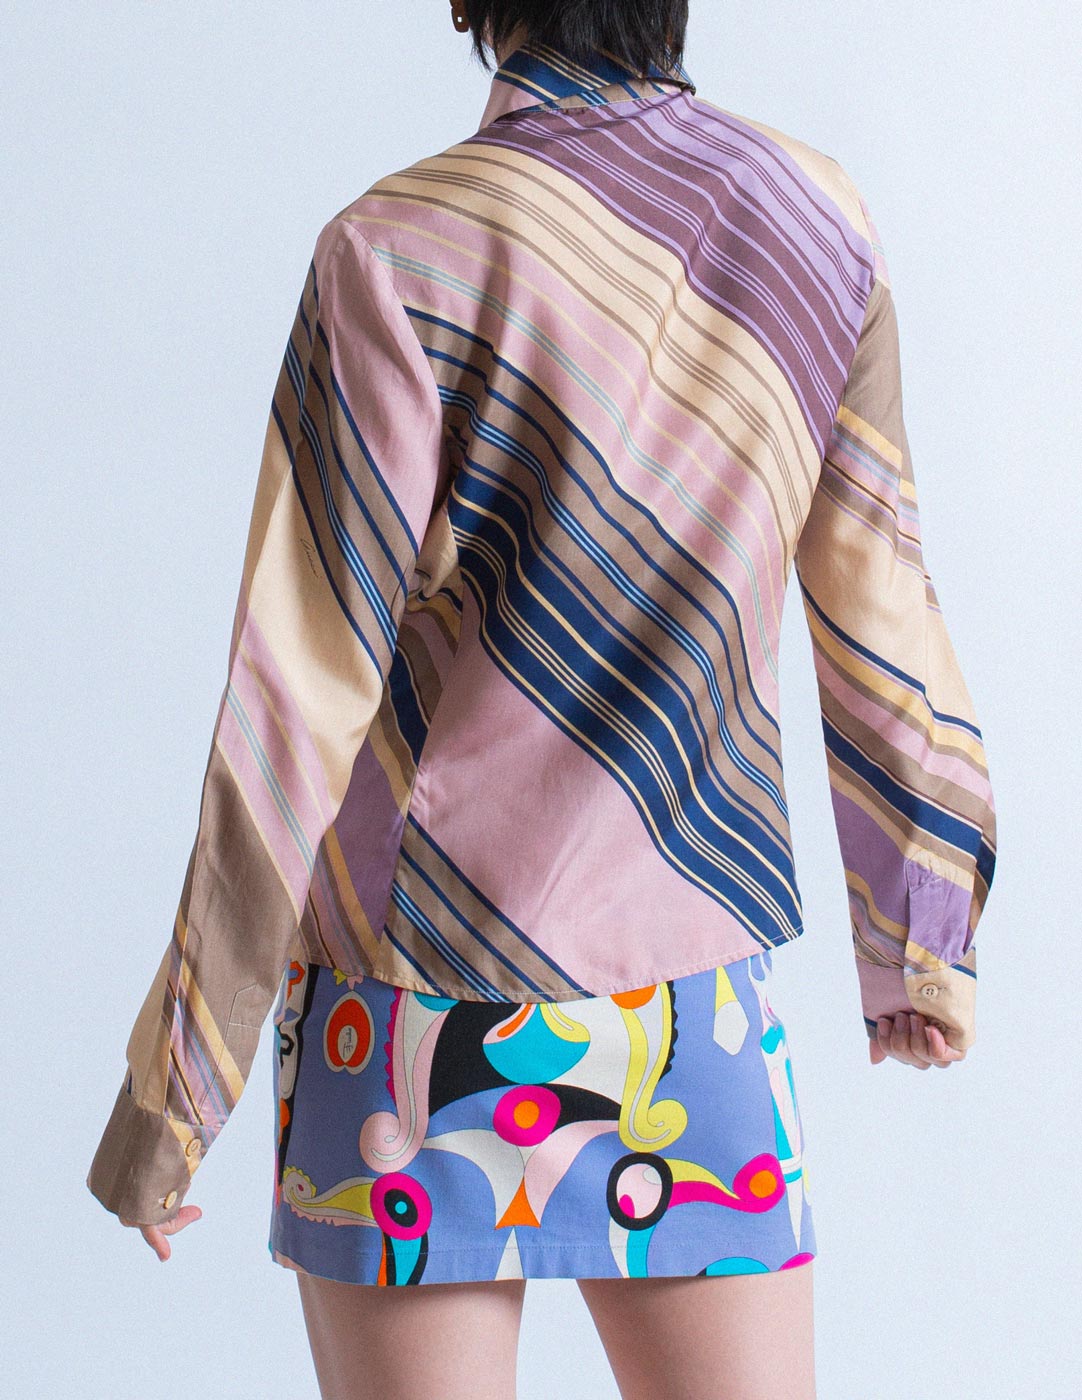 Gucci vintage lavender and cream striped silk shirt back detail